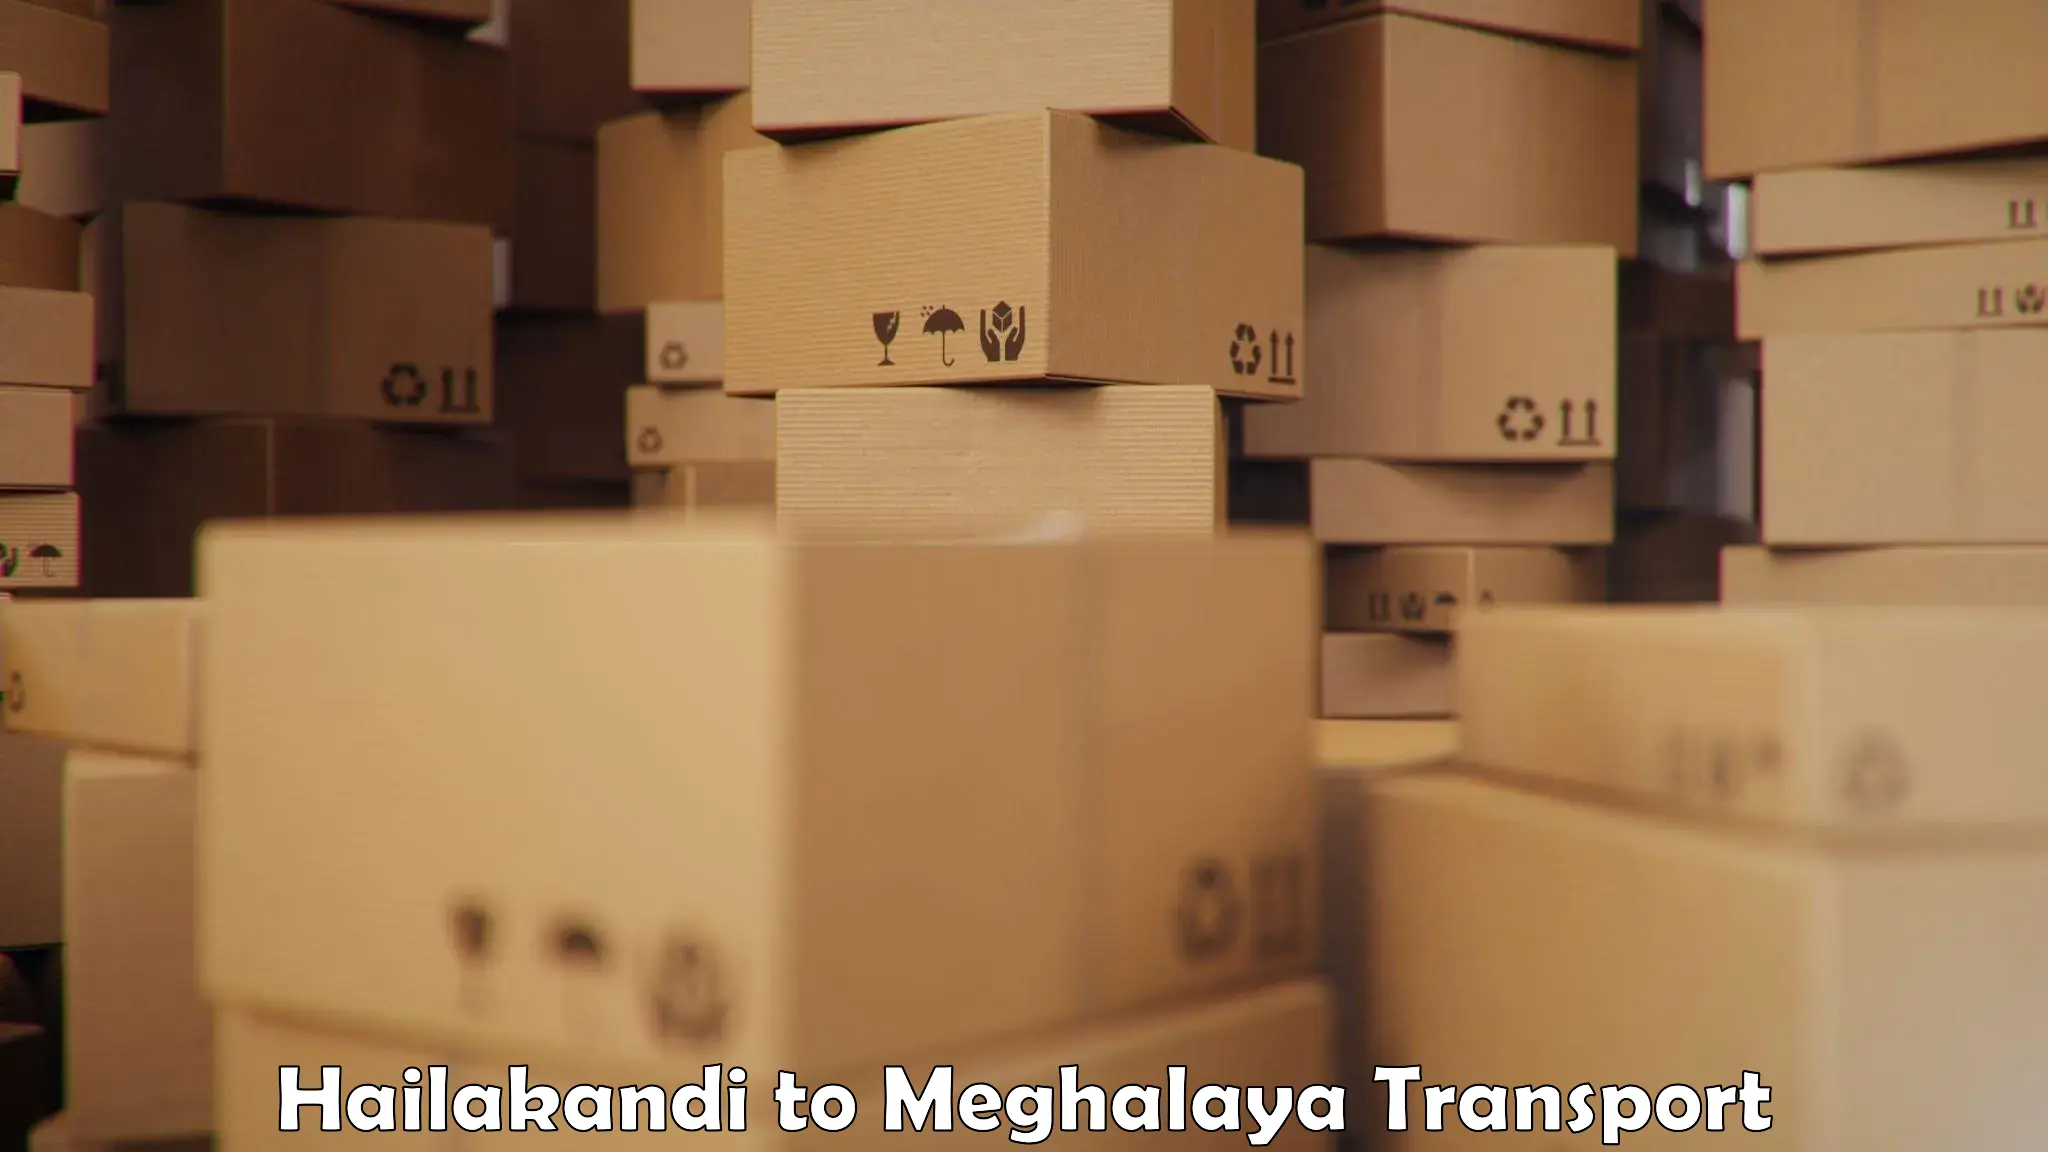 Truck transport companies in India Hailakandi to Meghalaya